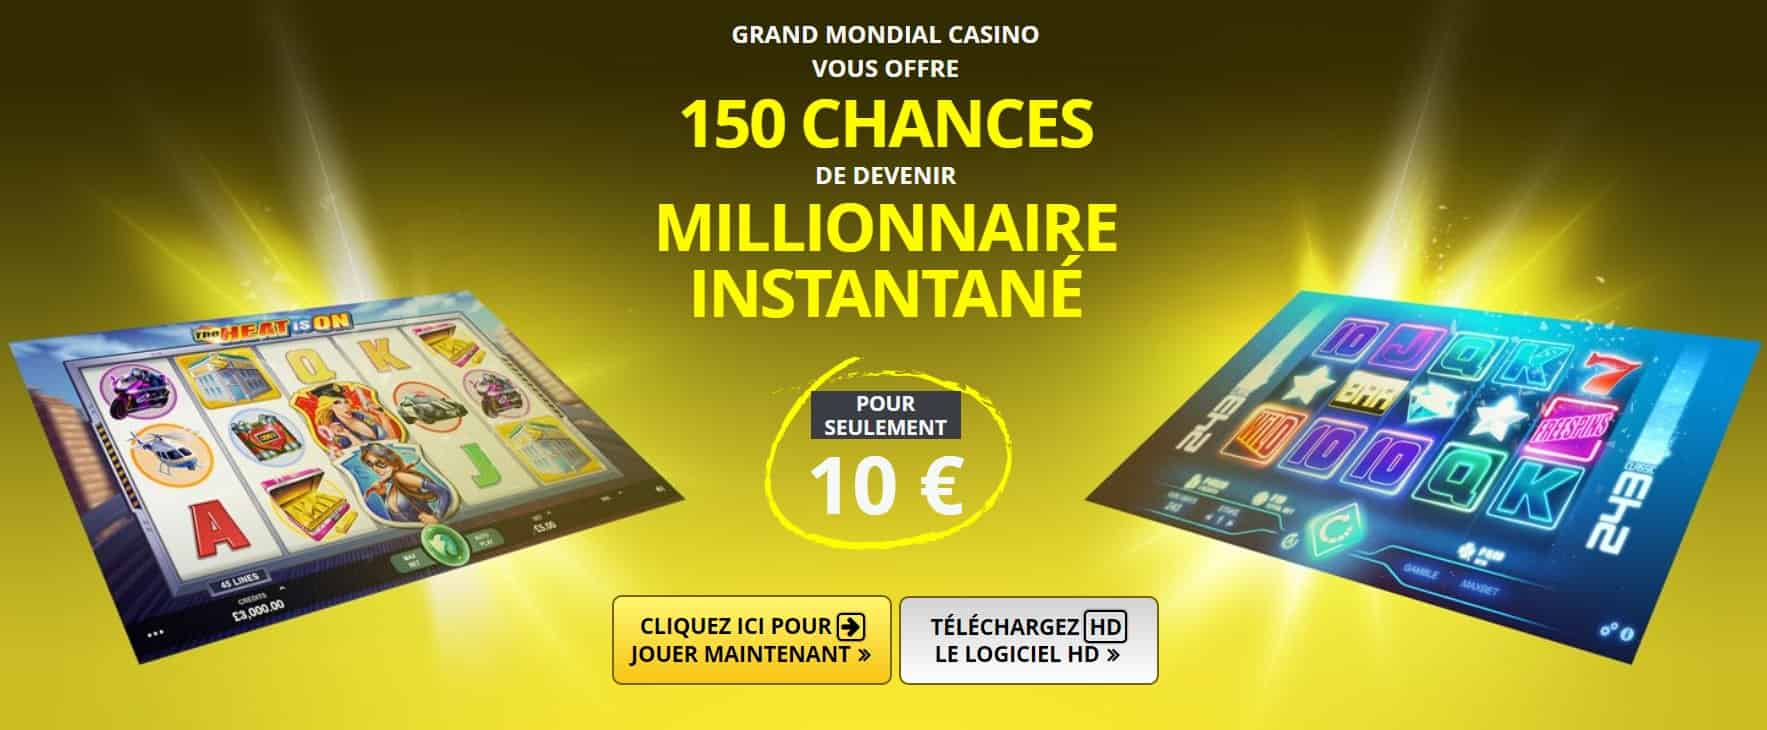 grand mondial casino 150 free spins